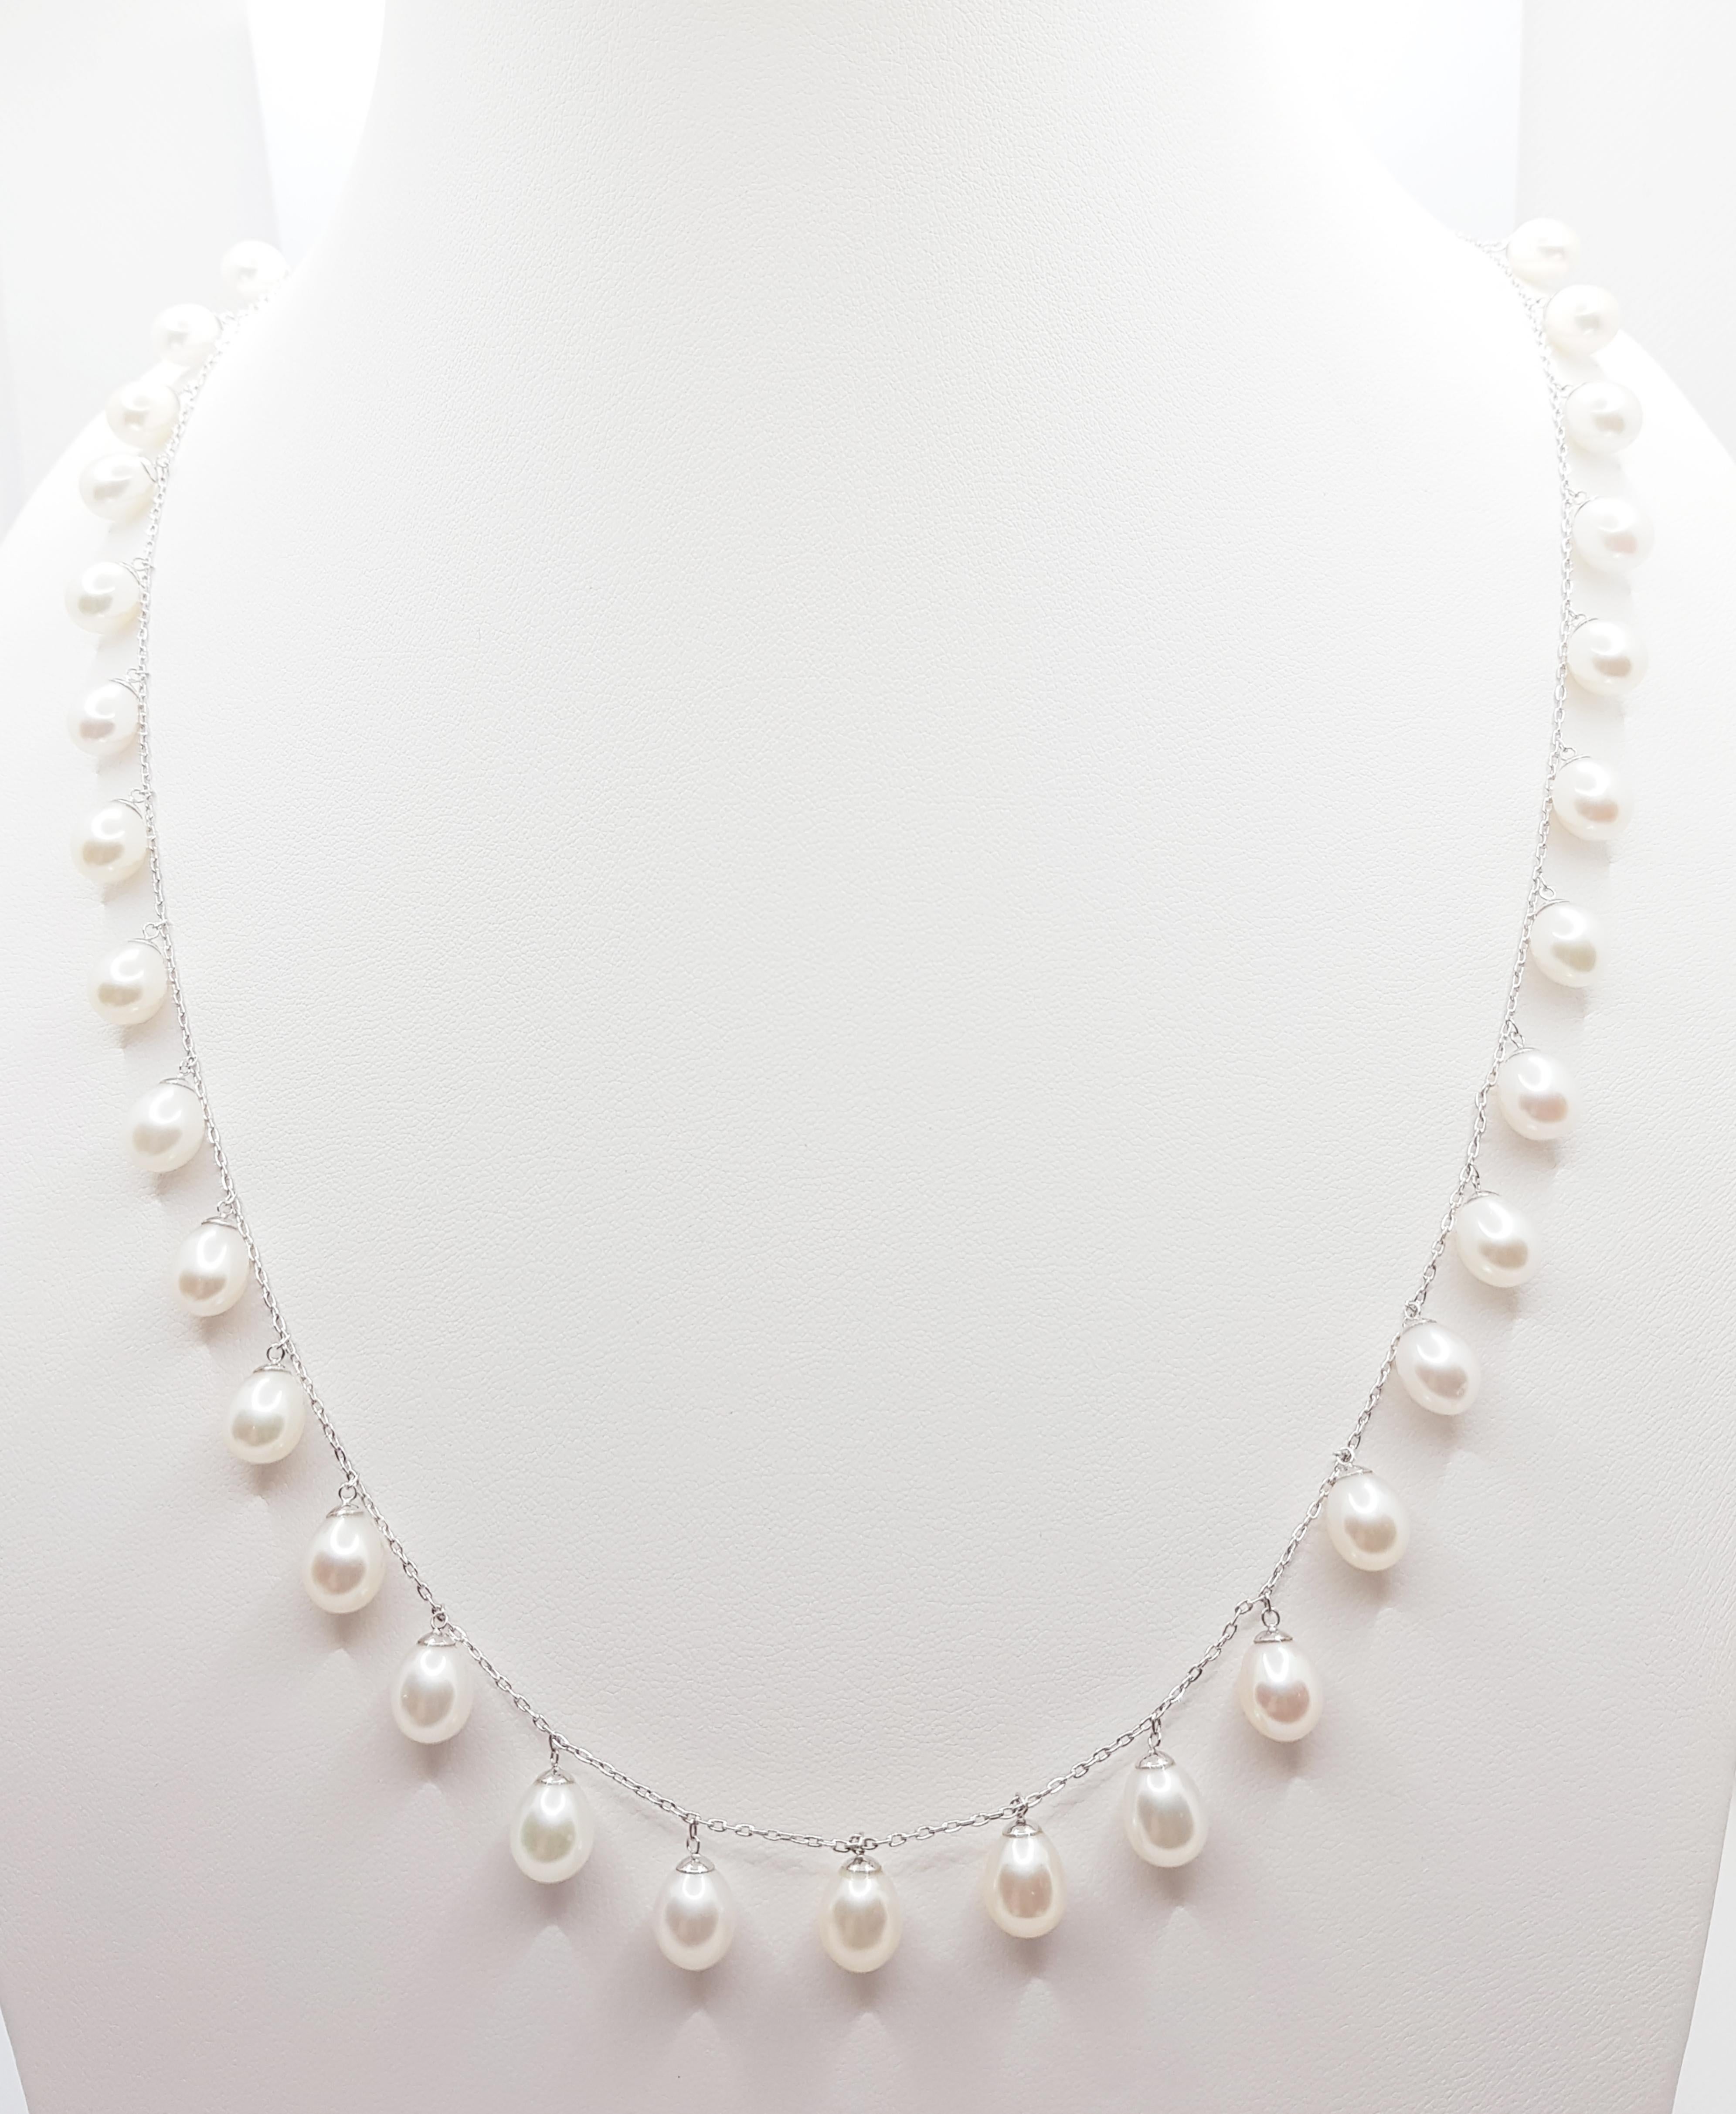 Fresh Water Pearl Necklace set in 18 Karat White Gold Settings

Width: 0.7 cm 
Length: 78.0 cm (30.5